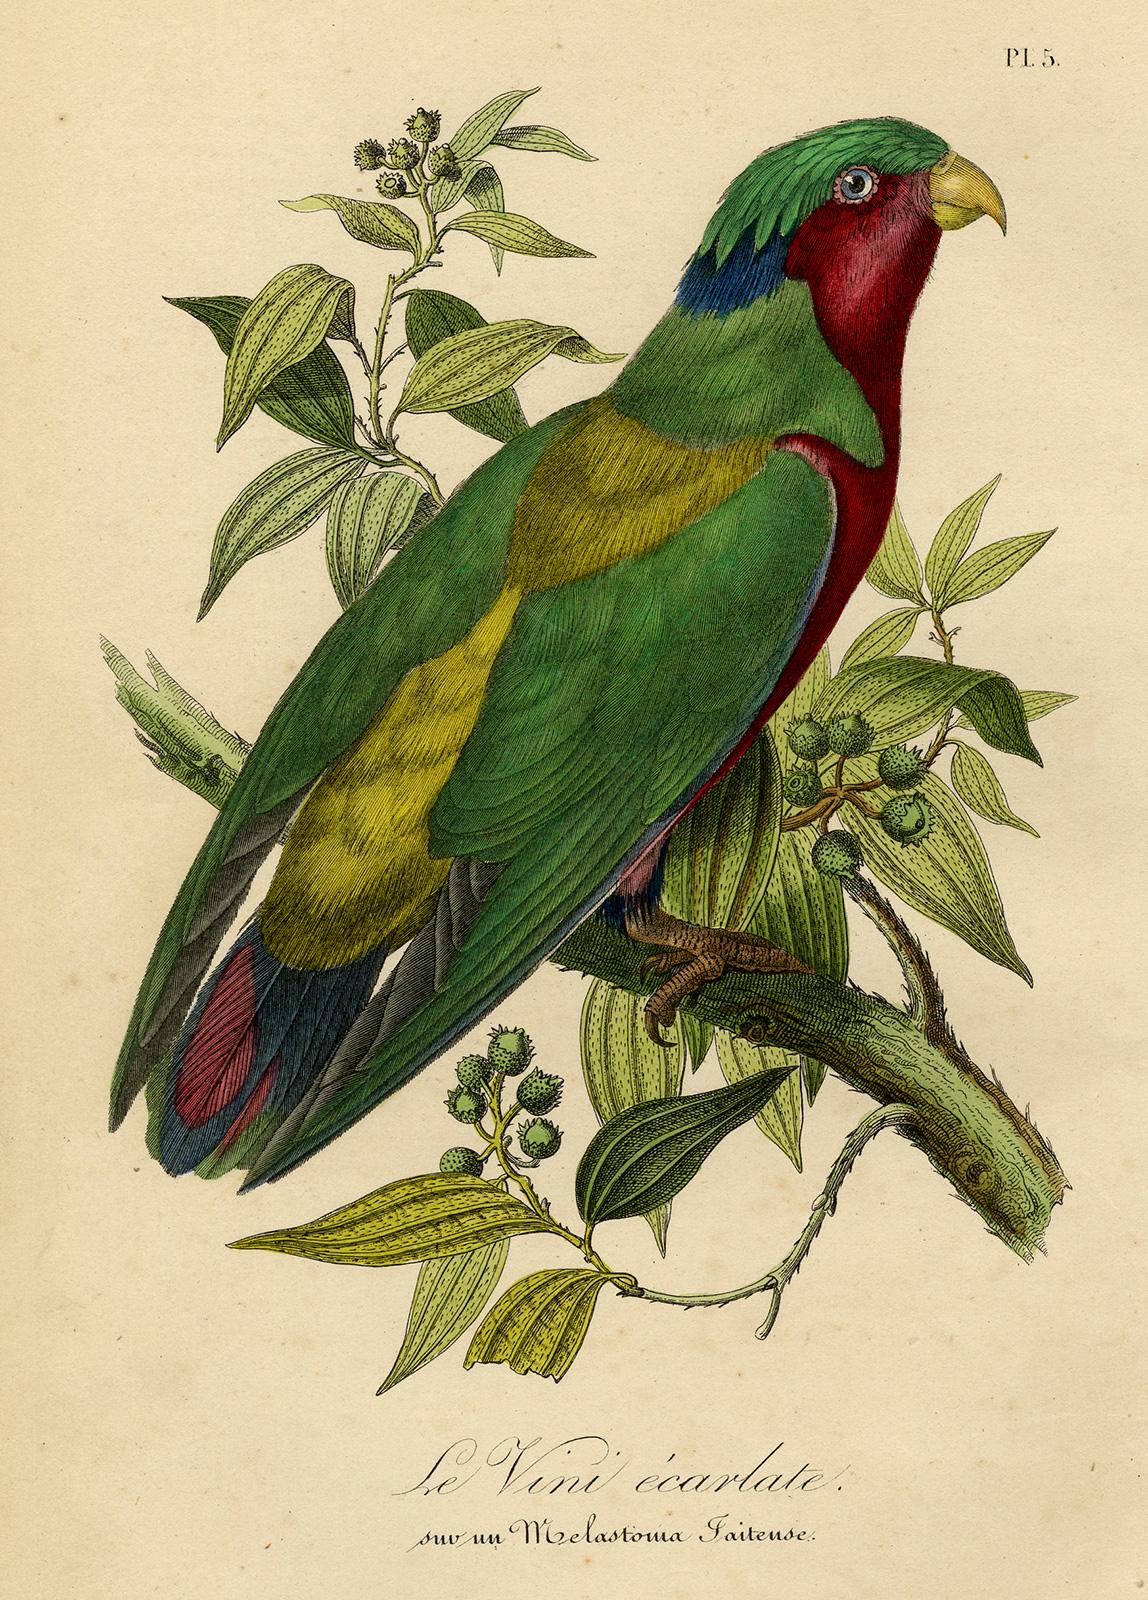 Jean-Emmanuel-Marie Le Maout Animal Print - Antique print of a parrot - Le Vini ecarlate by Le Maout - Engraving - 19th c.